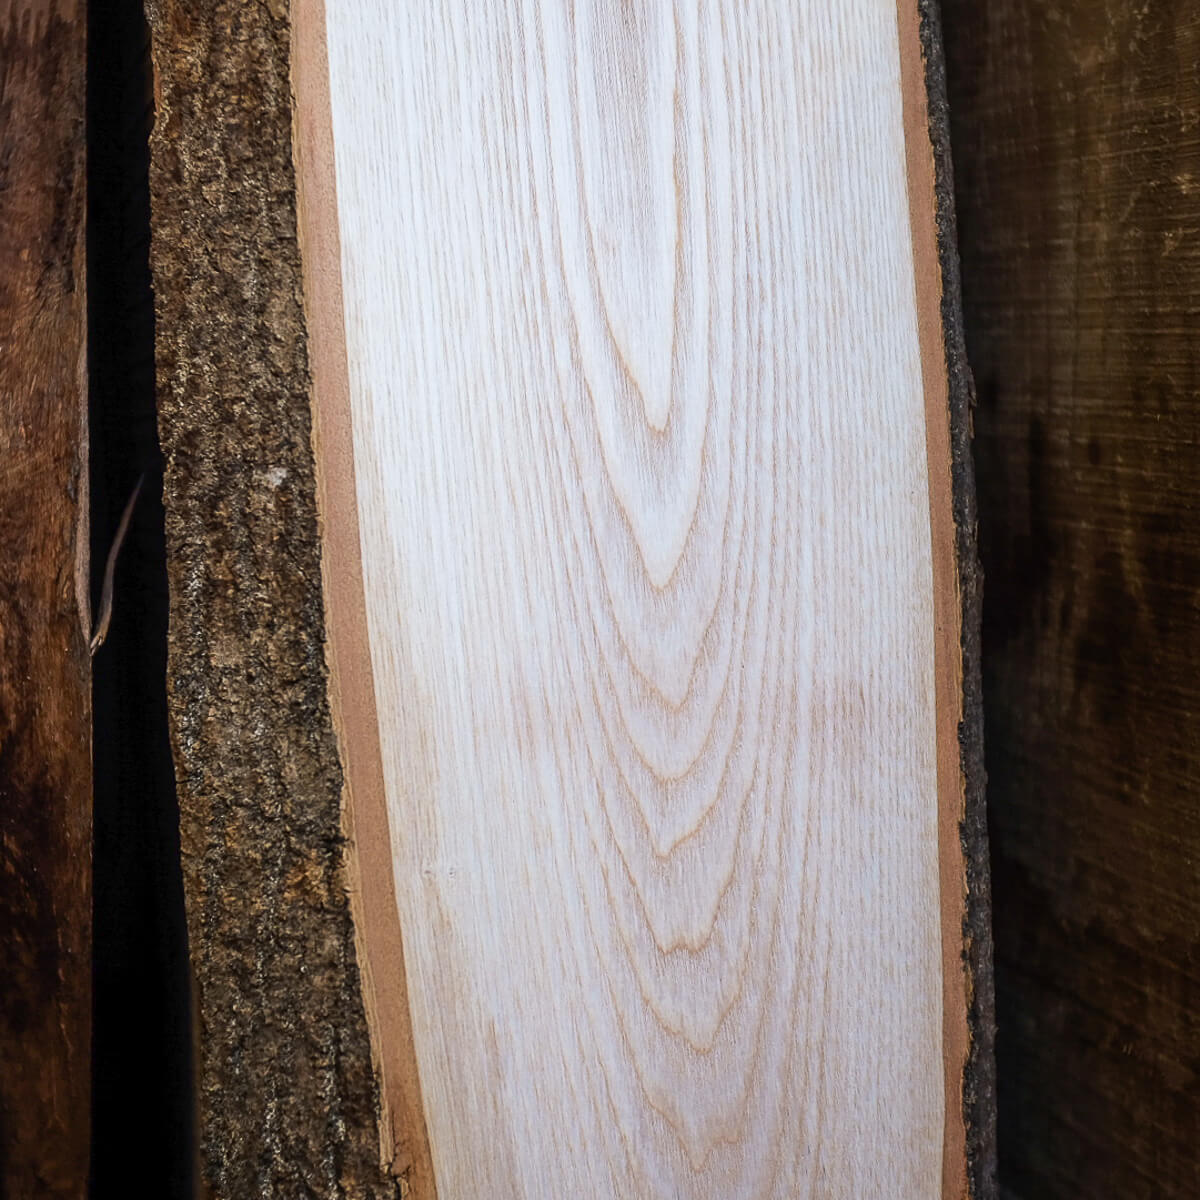 Ash timber board